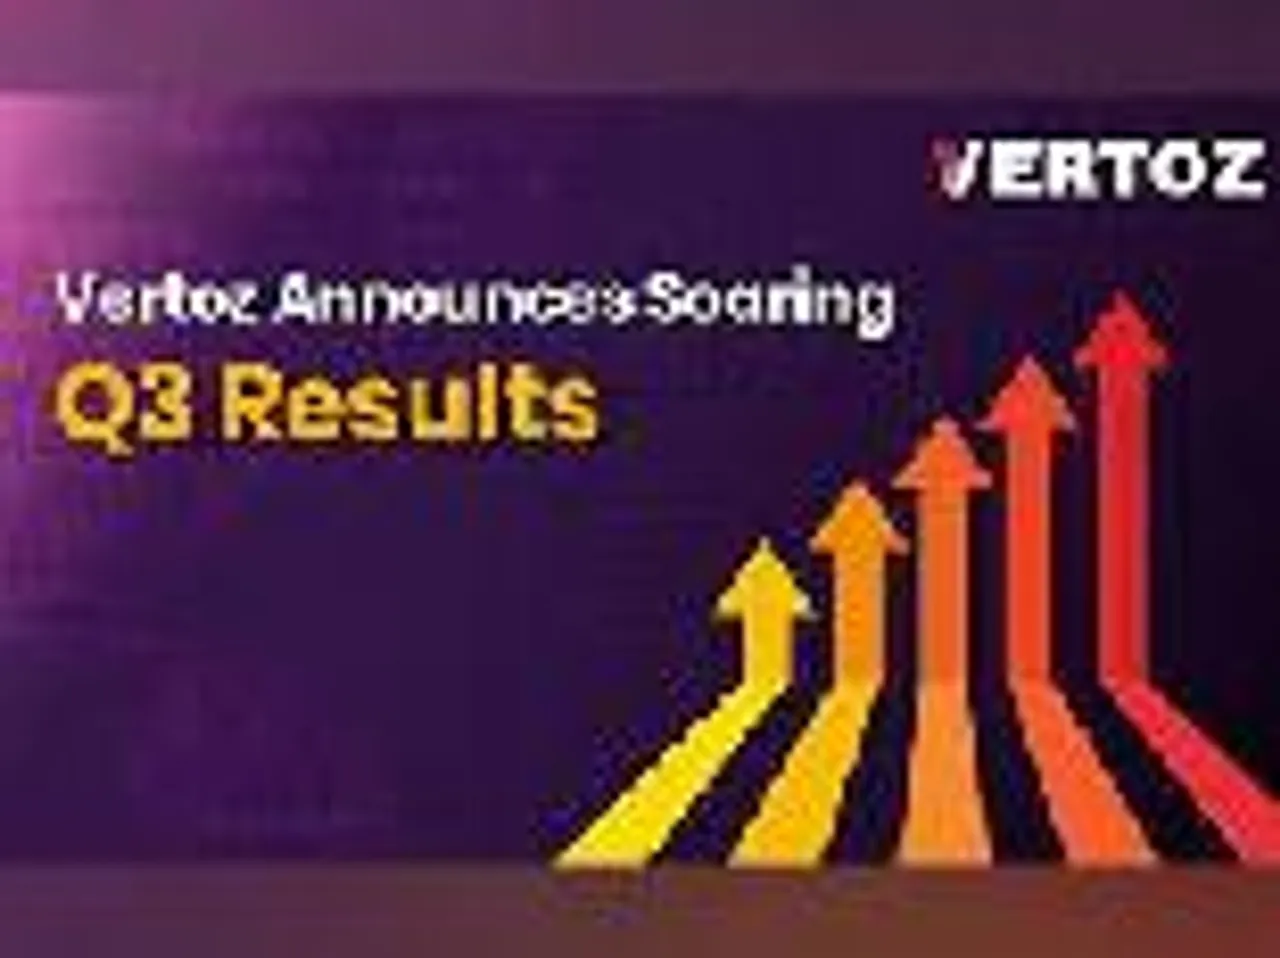 Vertoz Announces Soaring Q3 Results: Y-o-Y Total Revenue Rises by 78.13 Percent